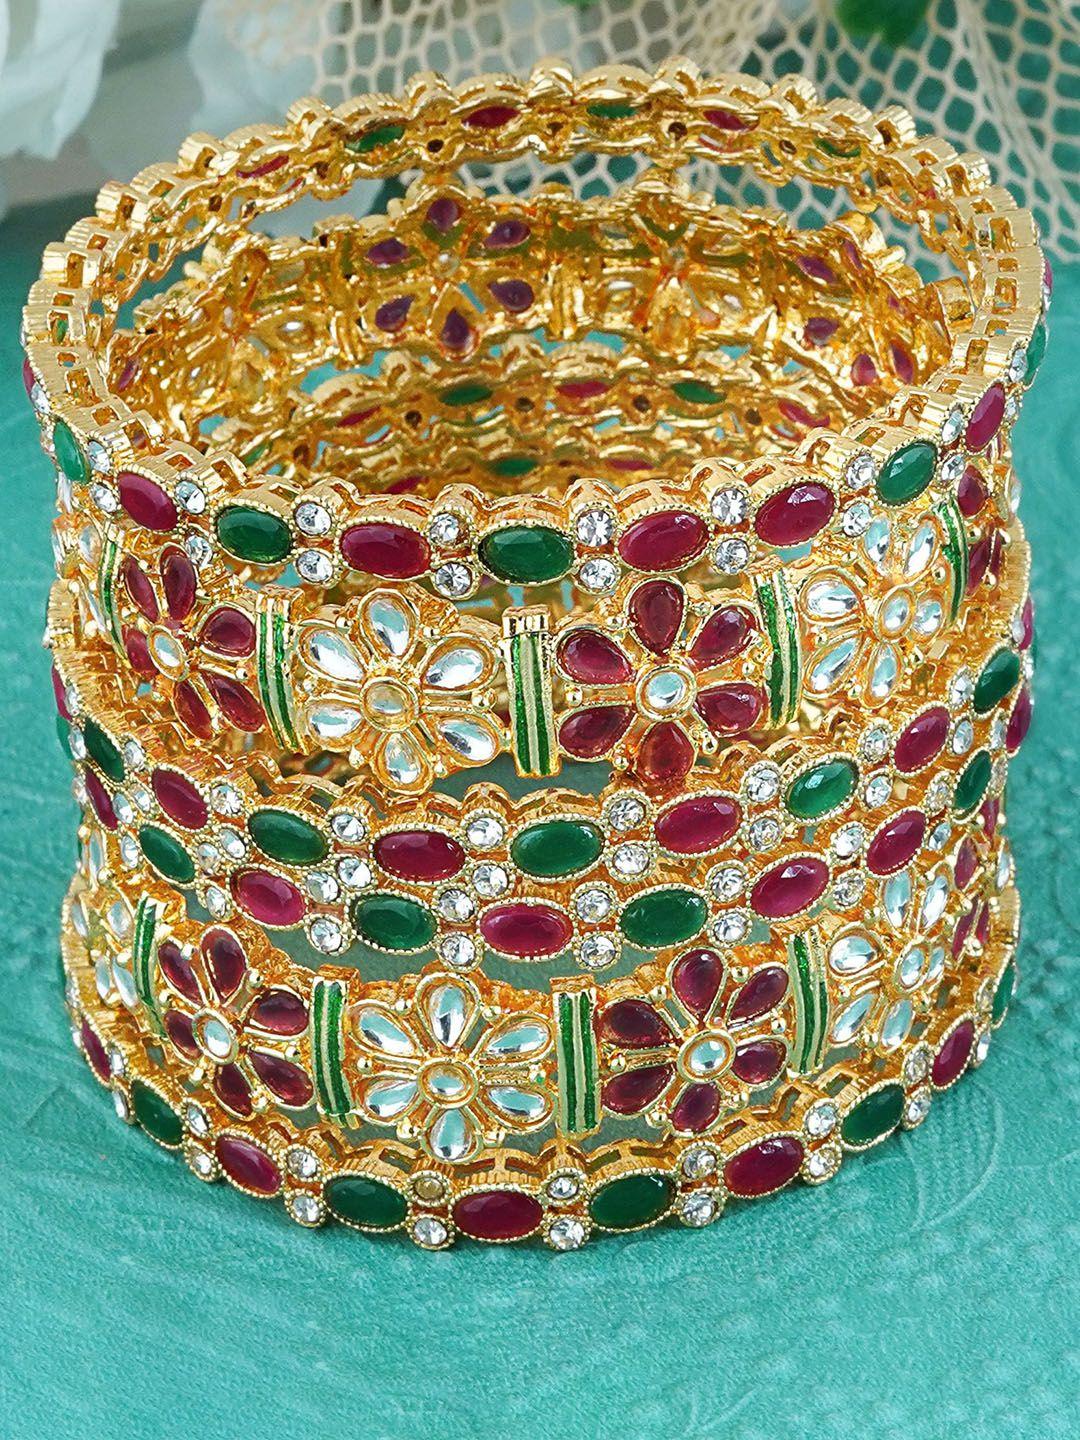 mansiyaorange set of 4 gold-plated ad-studded bangles